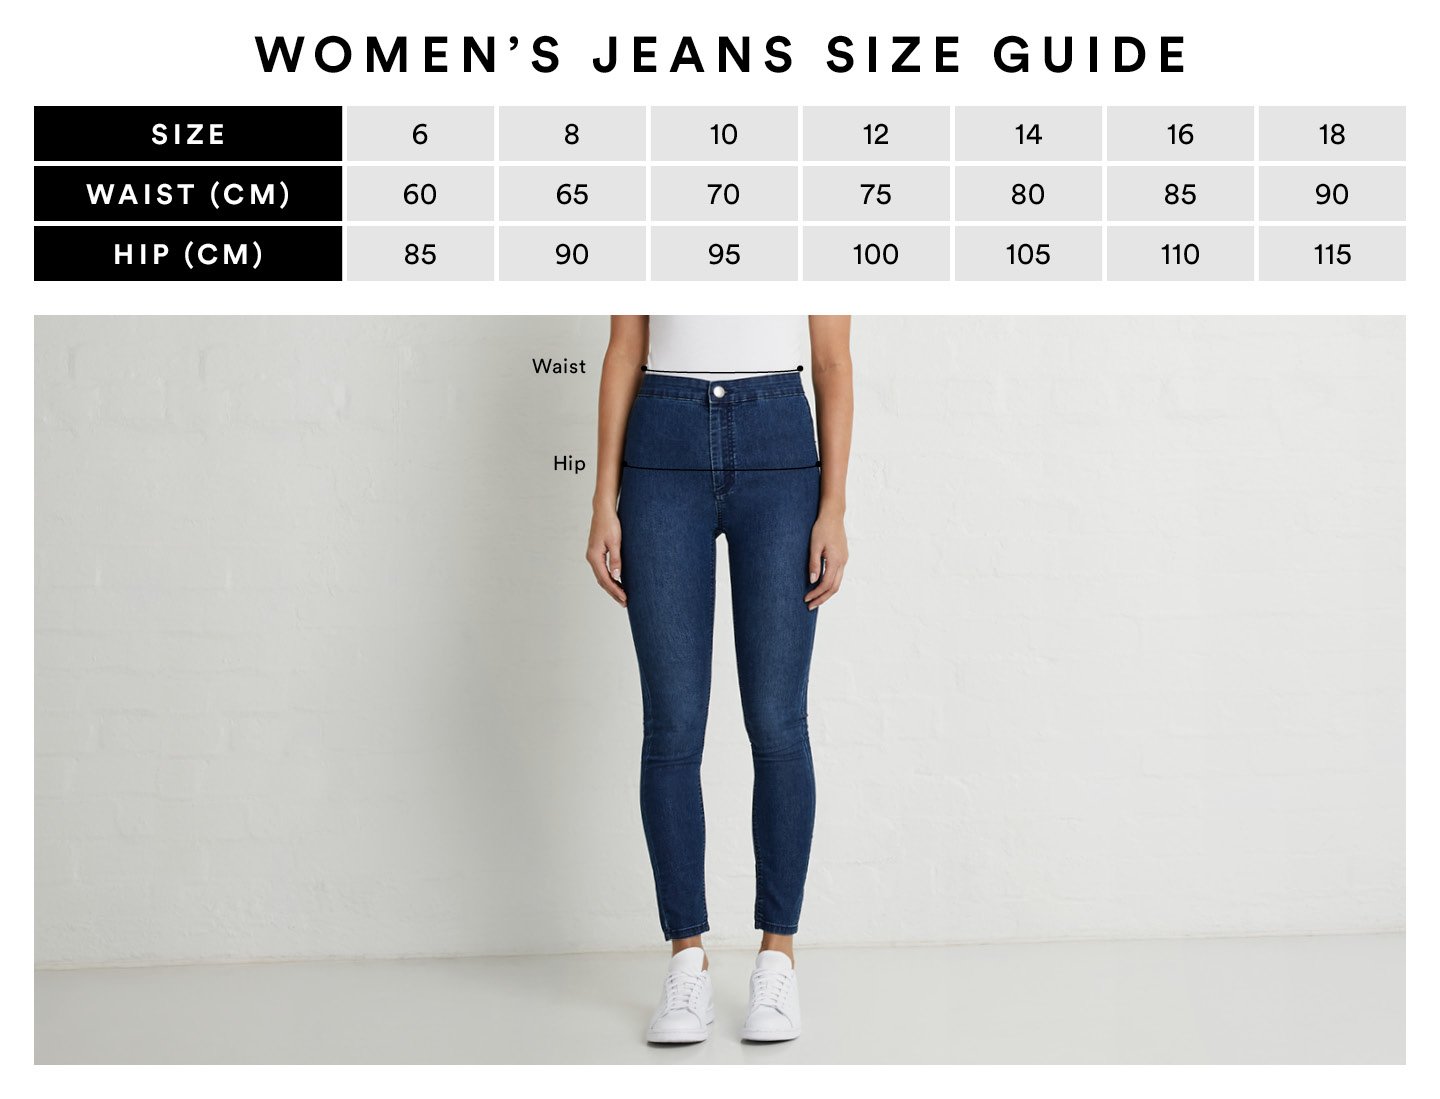 Size 16 Jeans Size Chart